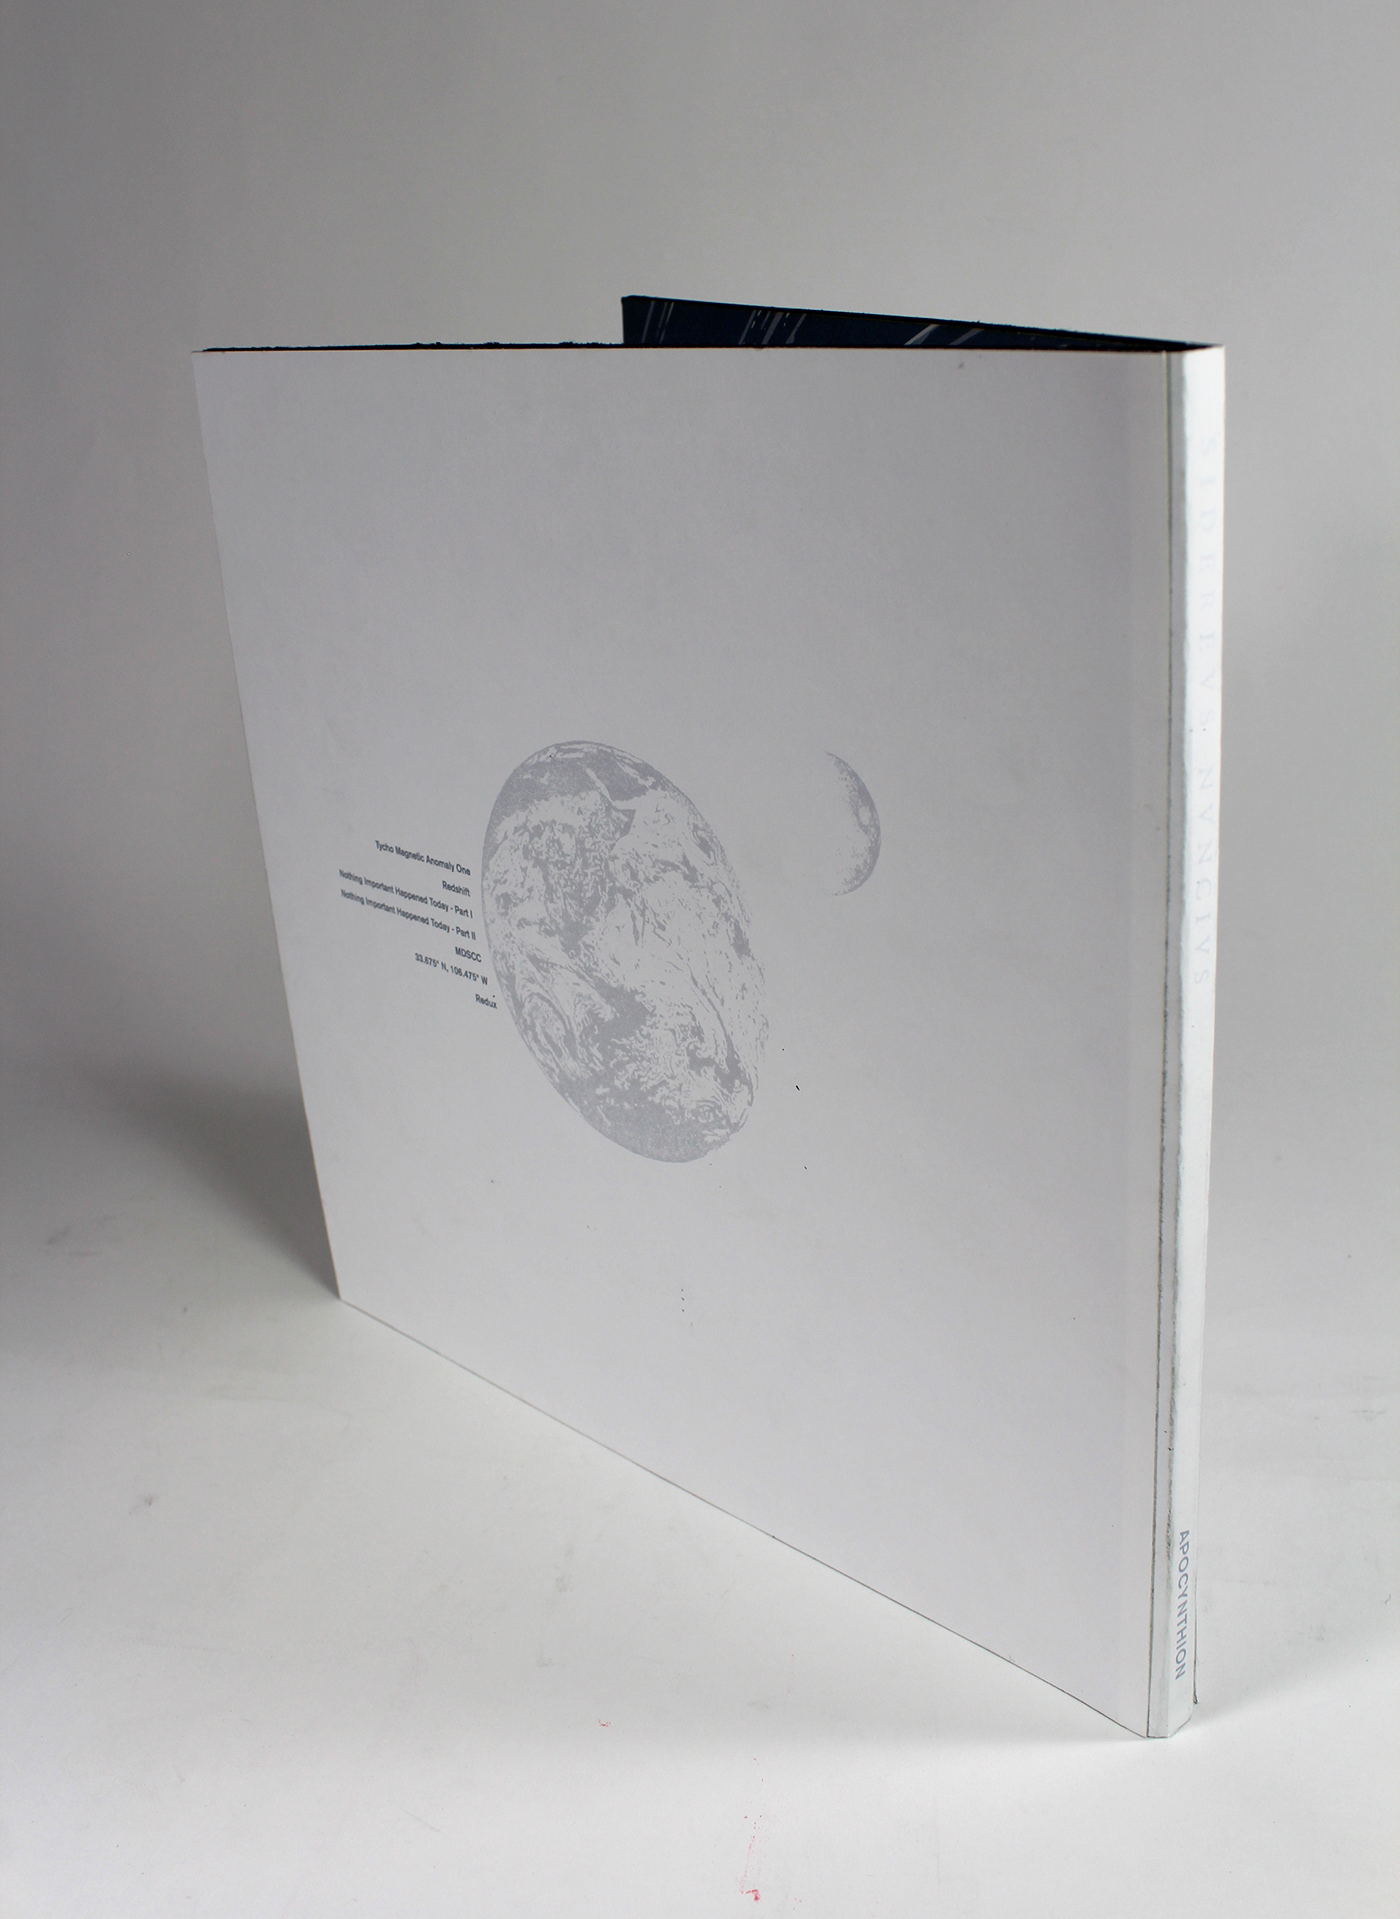 Sidereus Nuncius -Apocynthion Double LP Box Set on Behance